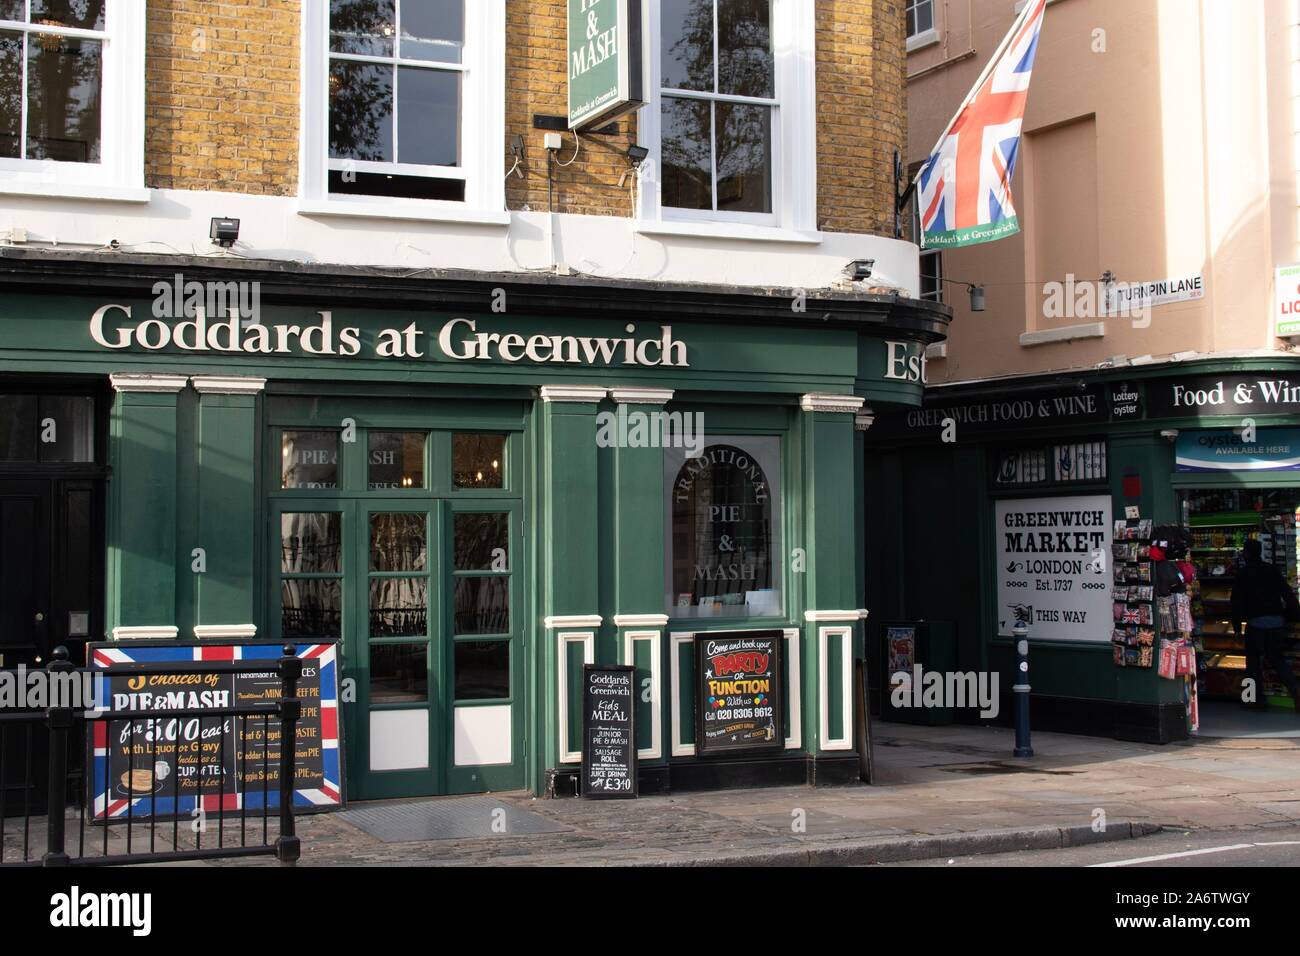 Goddards at Greenwich Stock Photo